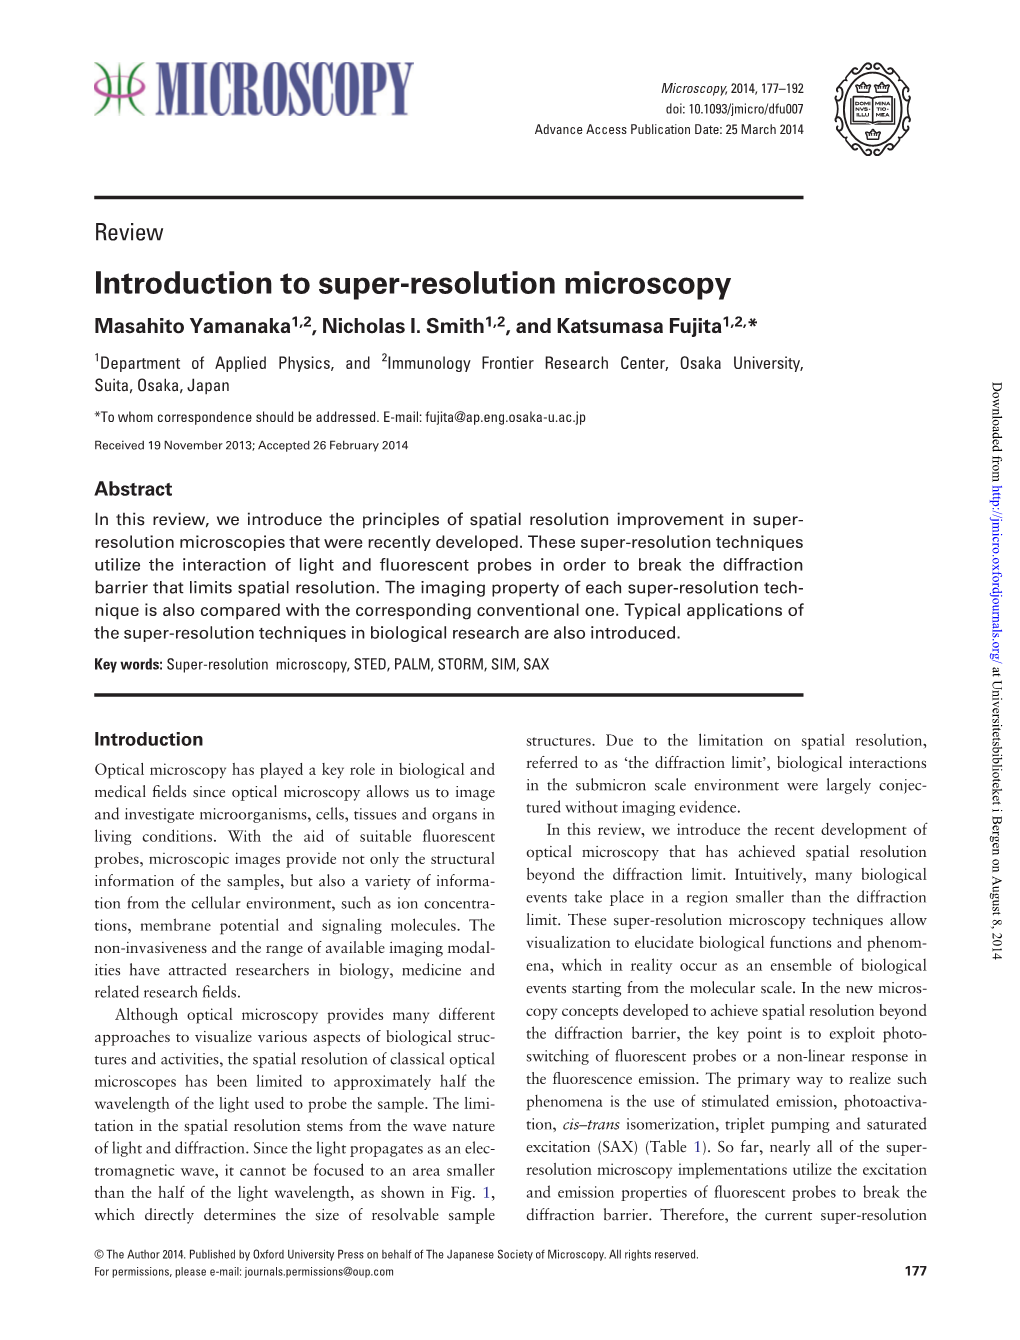 Introduction to Super-Resolution Microscopy Masahito Yamanaka1,2, Nicholas I